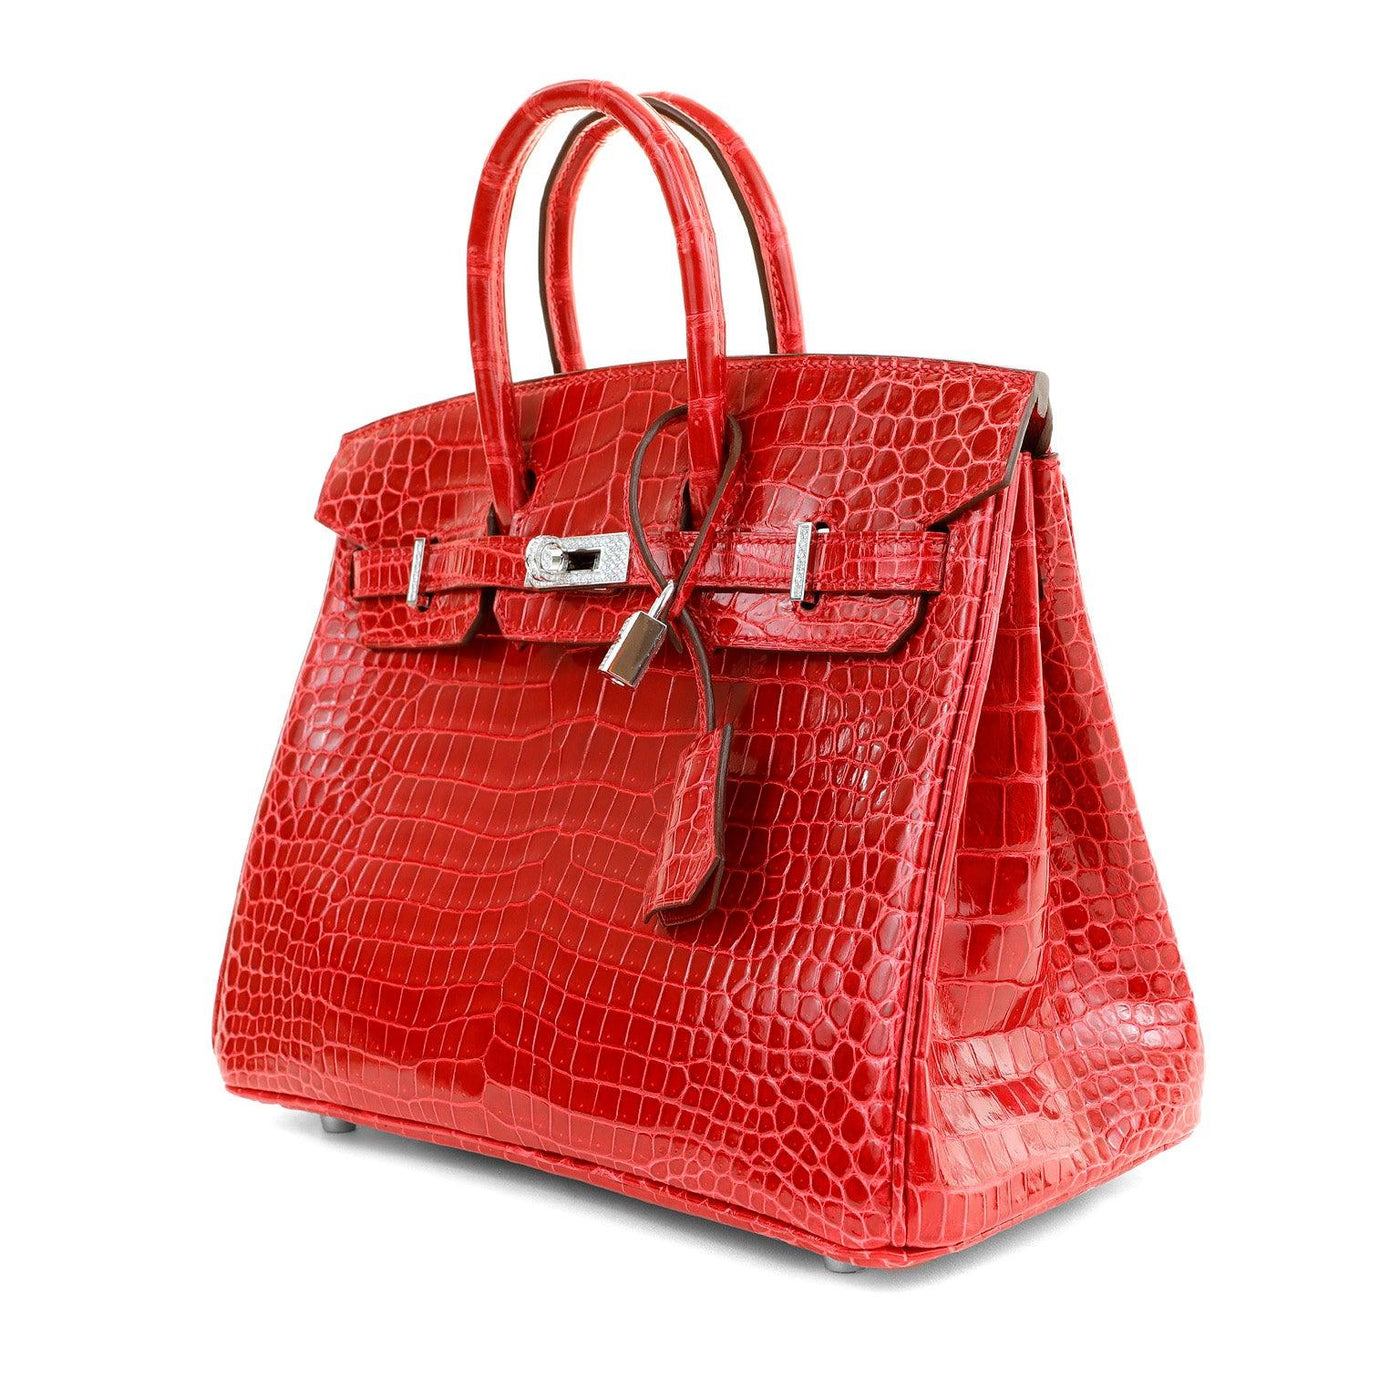 Hermès, Birkin, 25cm, Lipstick Red, Porosus Crocodile, diamond encrusted, luxury, handbag, compact size, timeless design, fashion, accessory, bold, glamorous